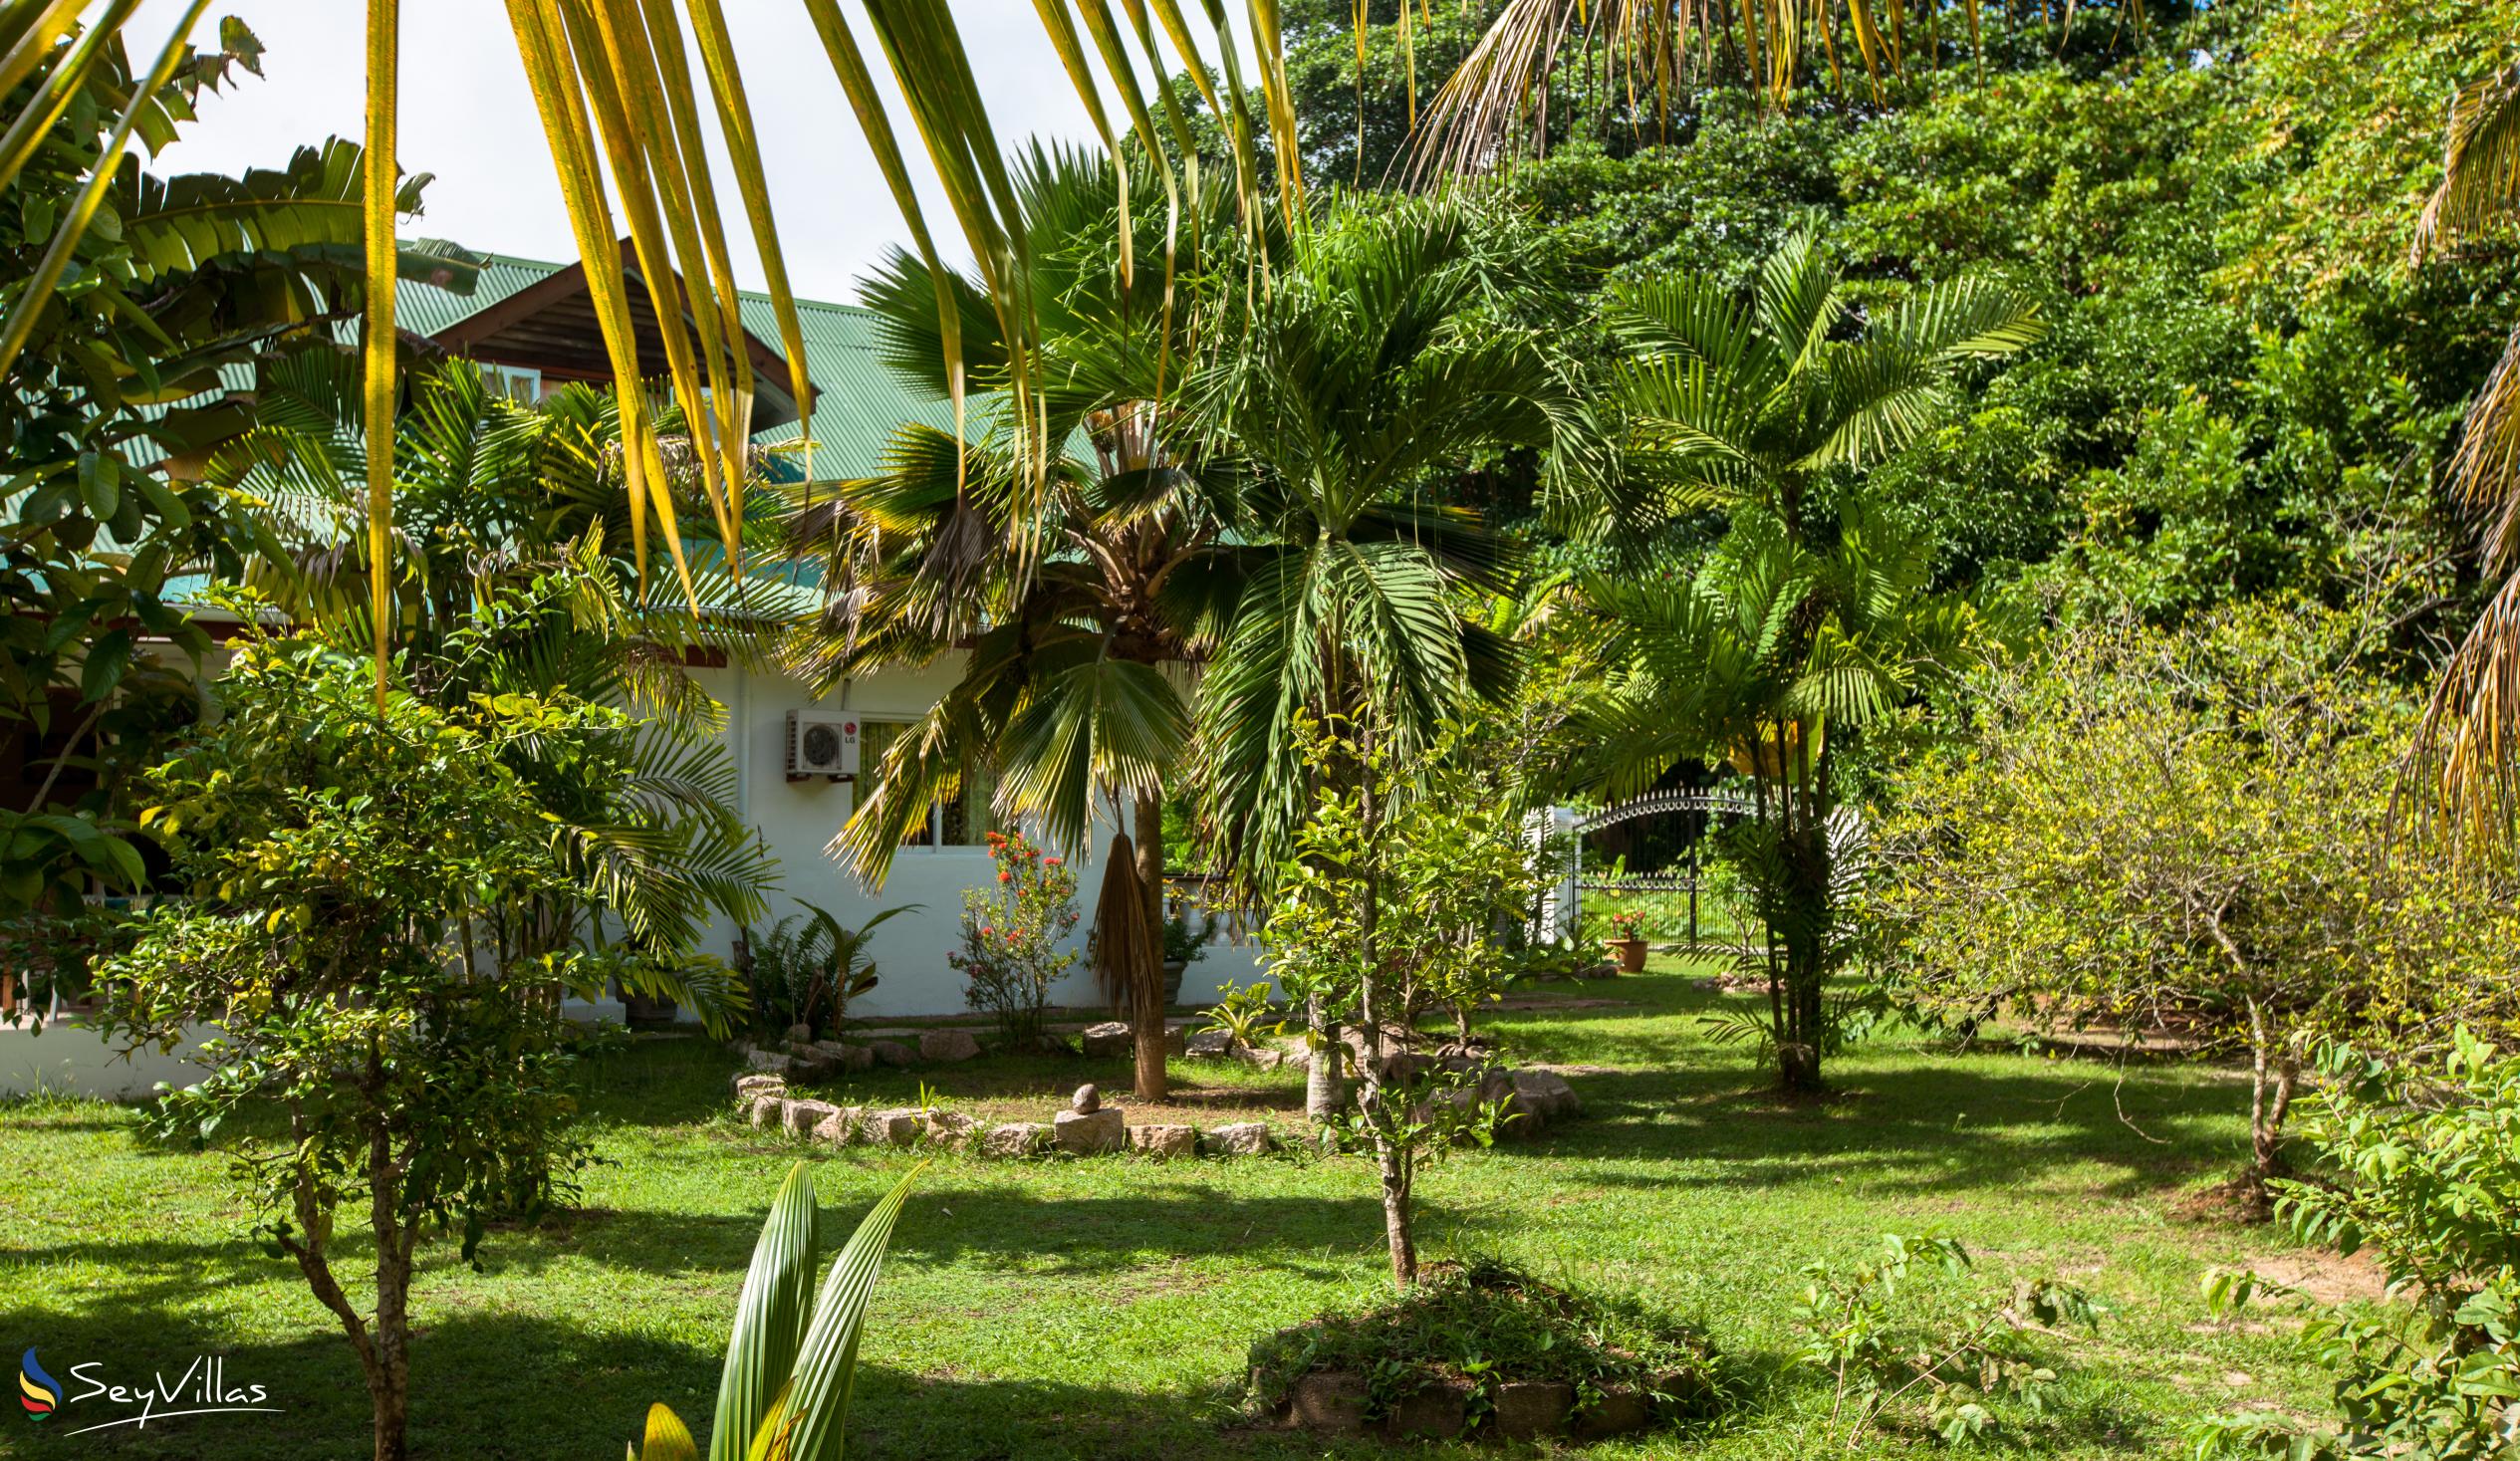 Photo 61: Pension Fidele - Outdoor area - La Digue (Seychelles)